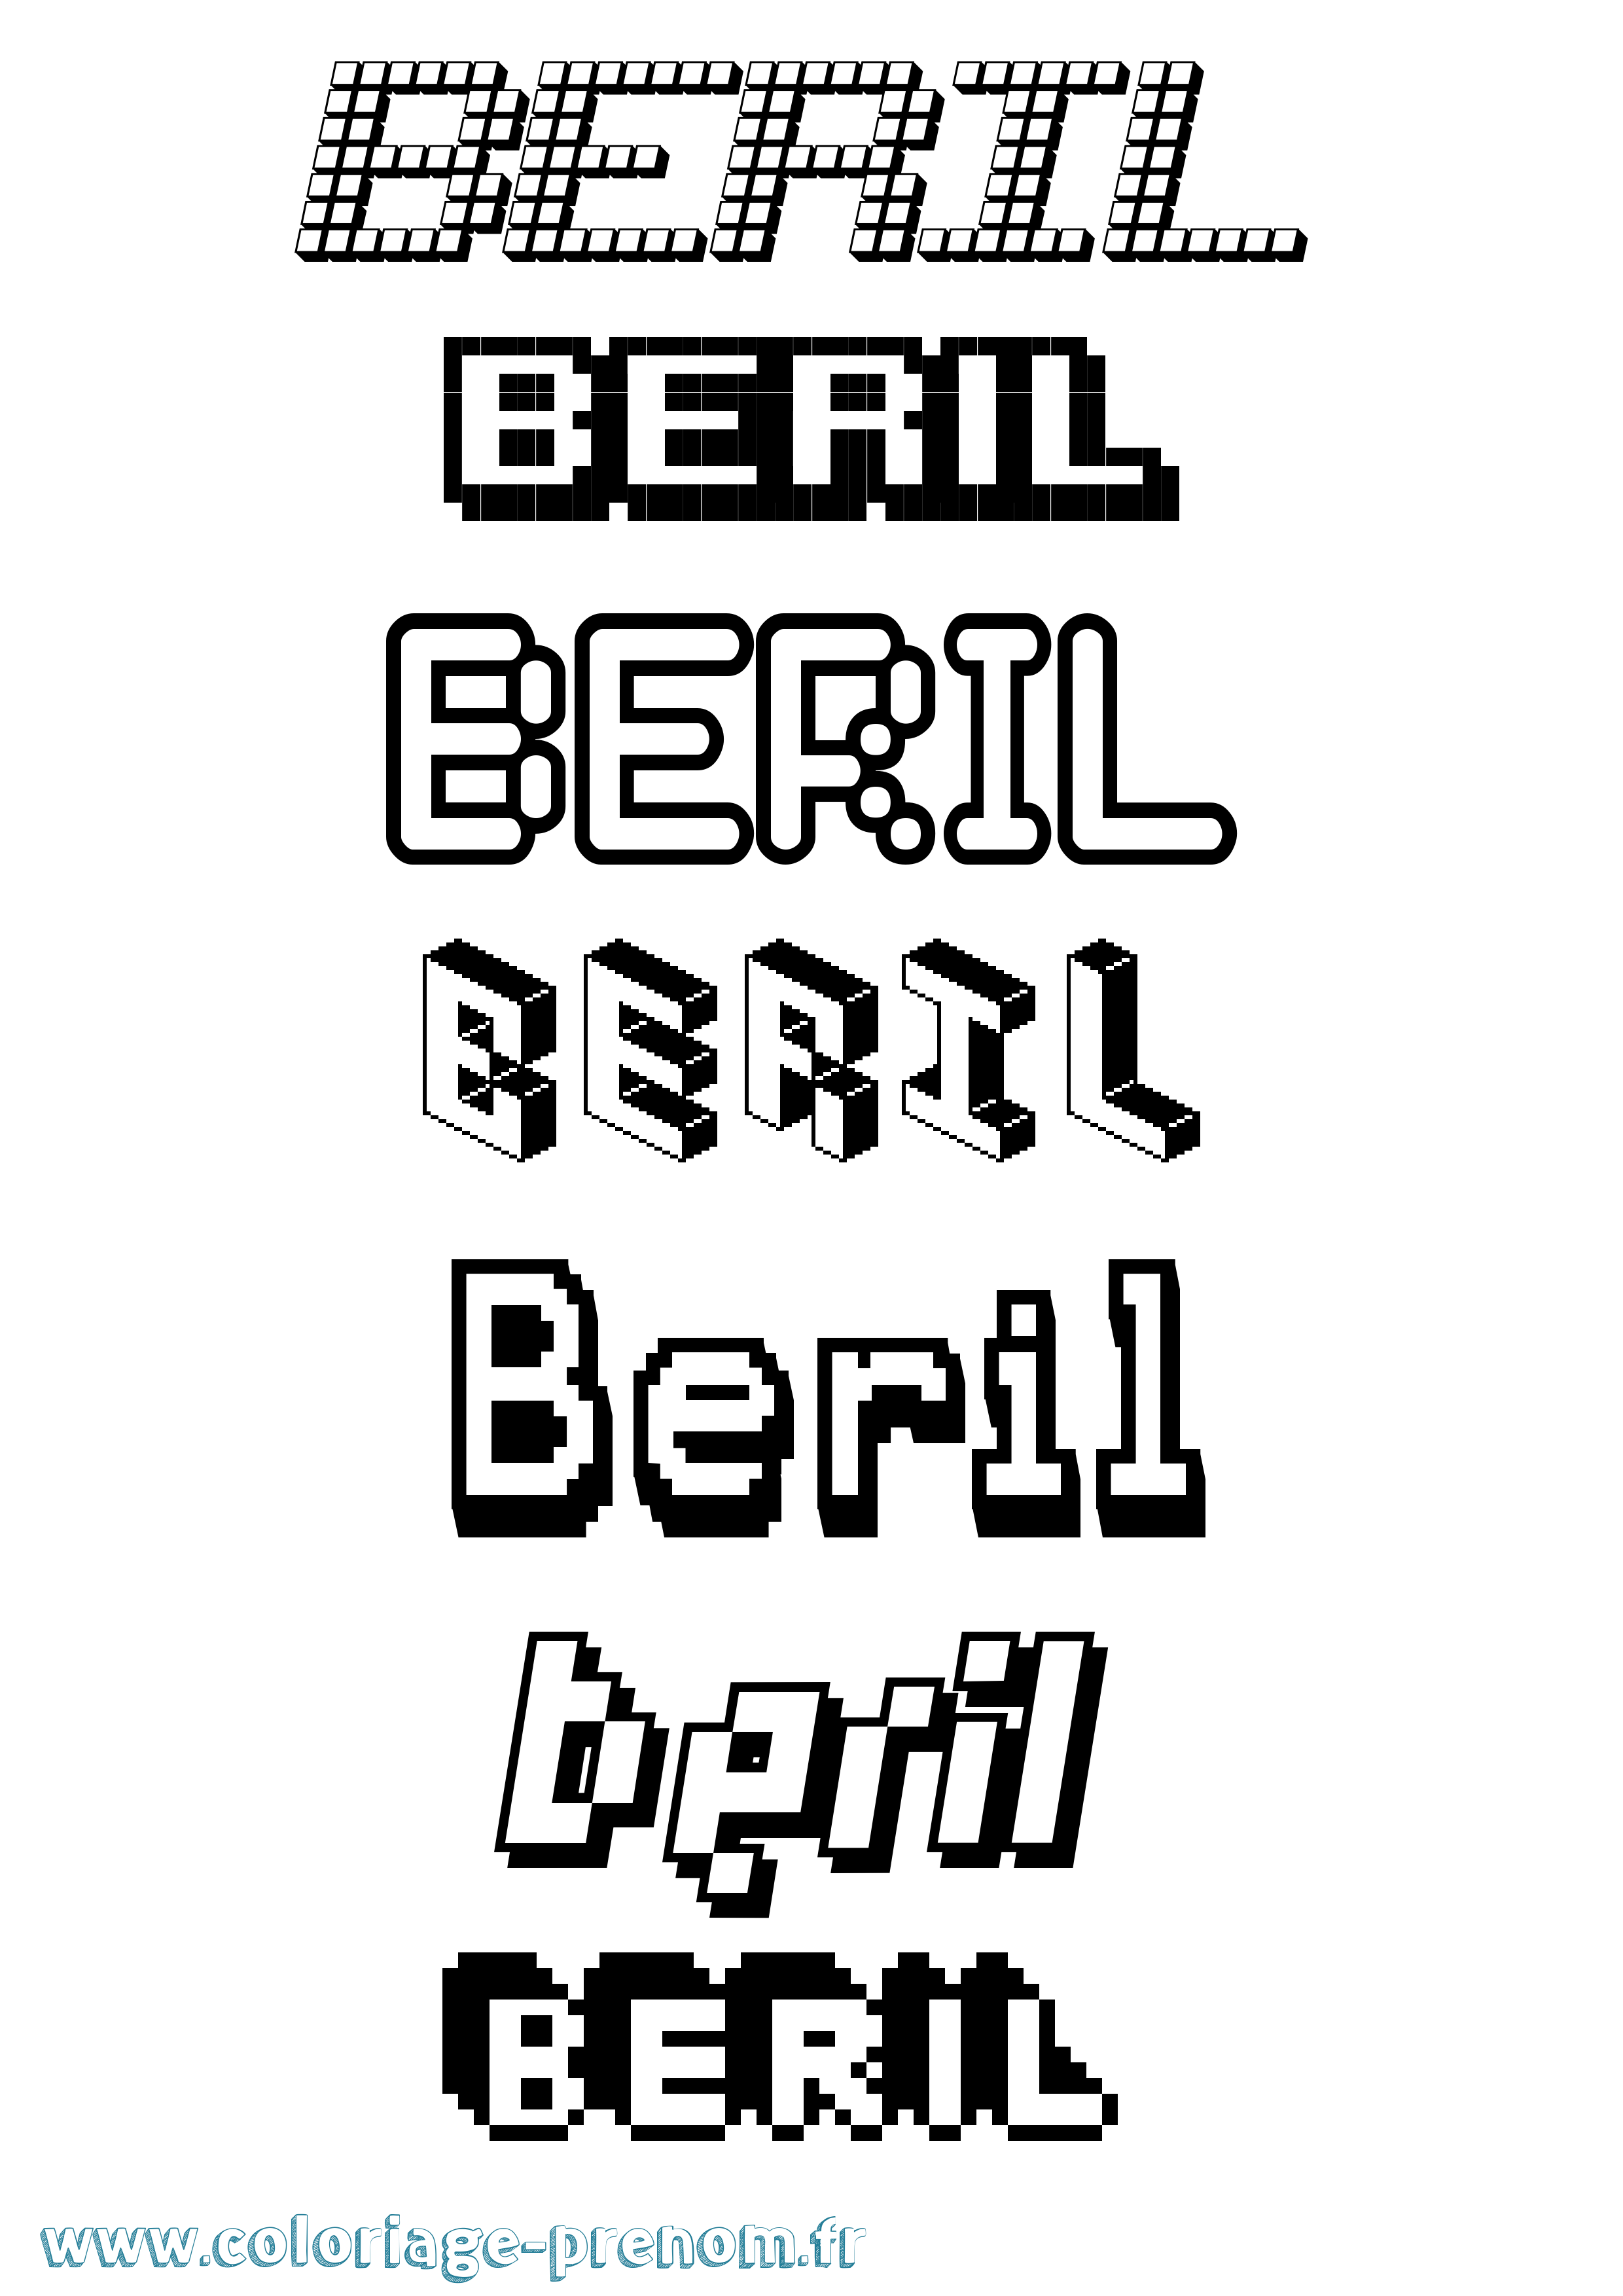 Coloriage prénom Beril Pixel